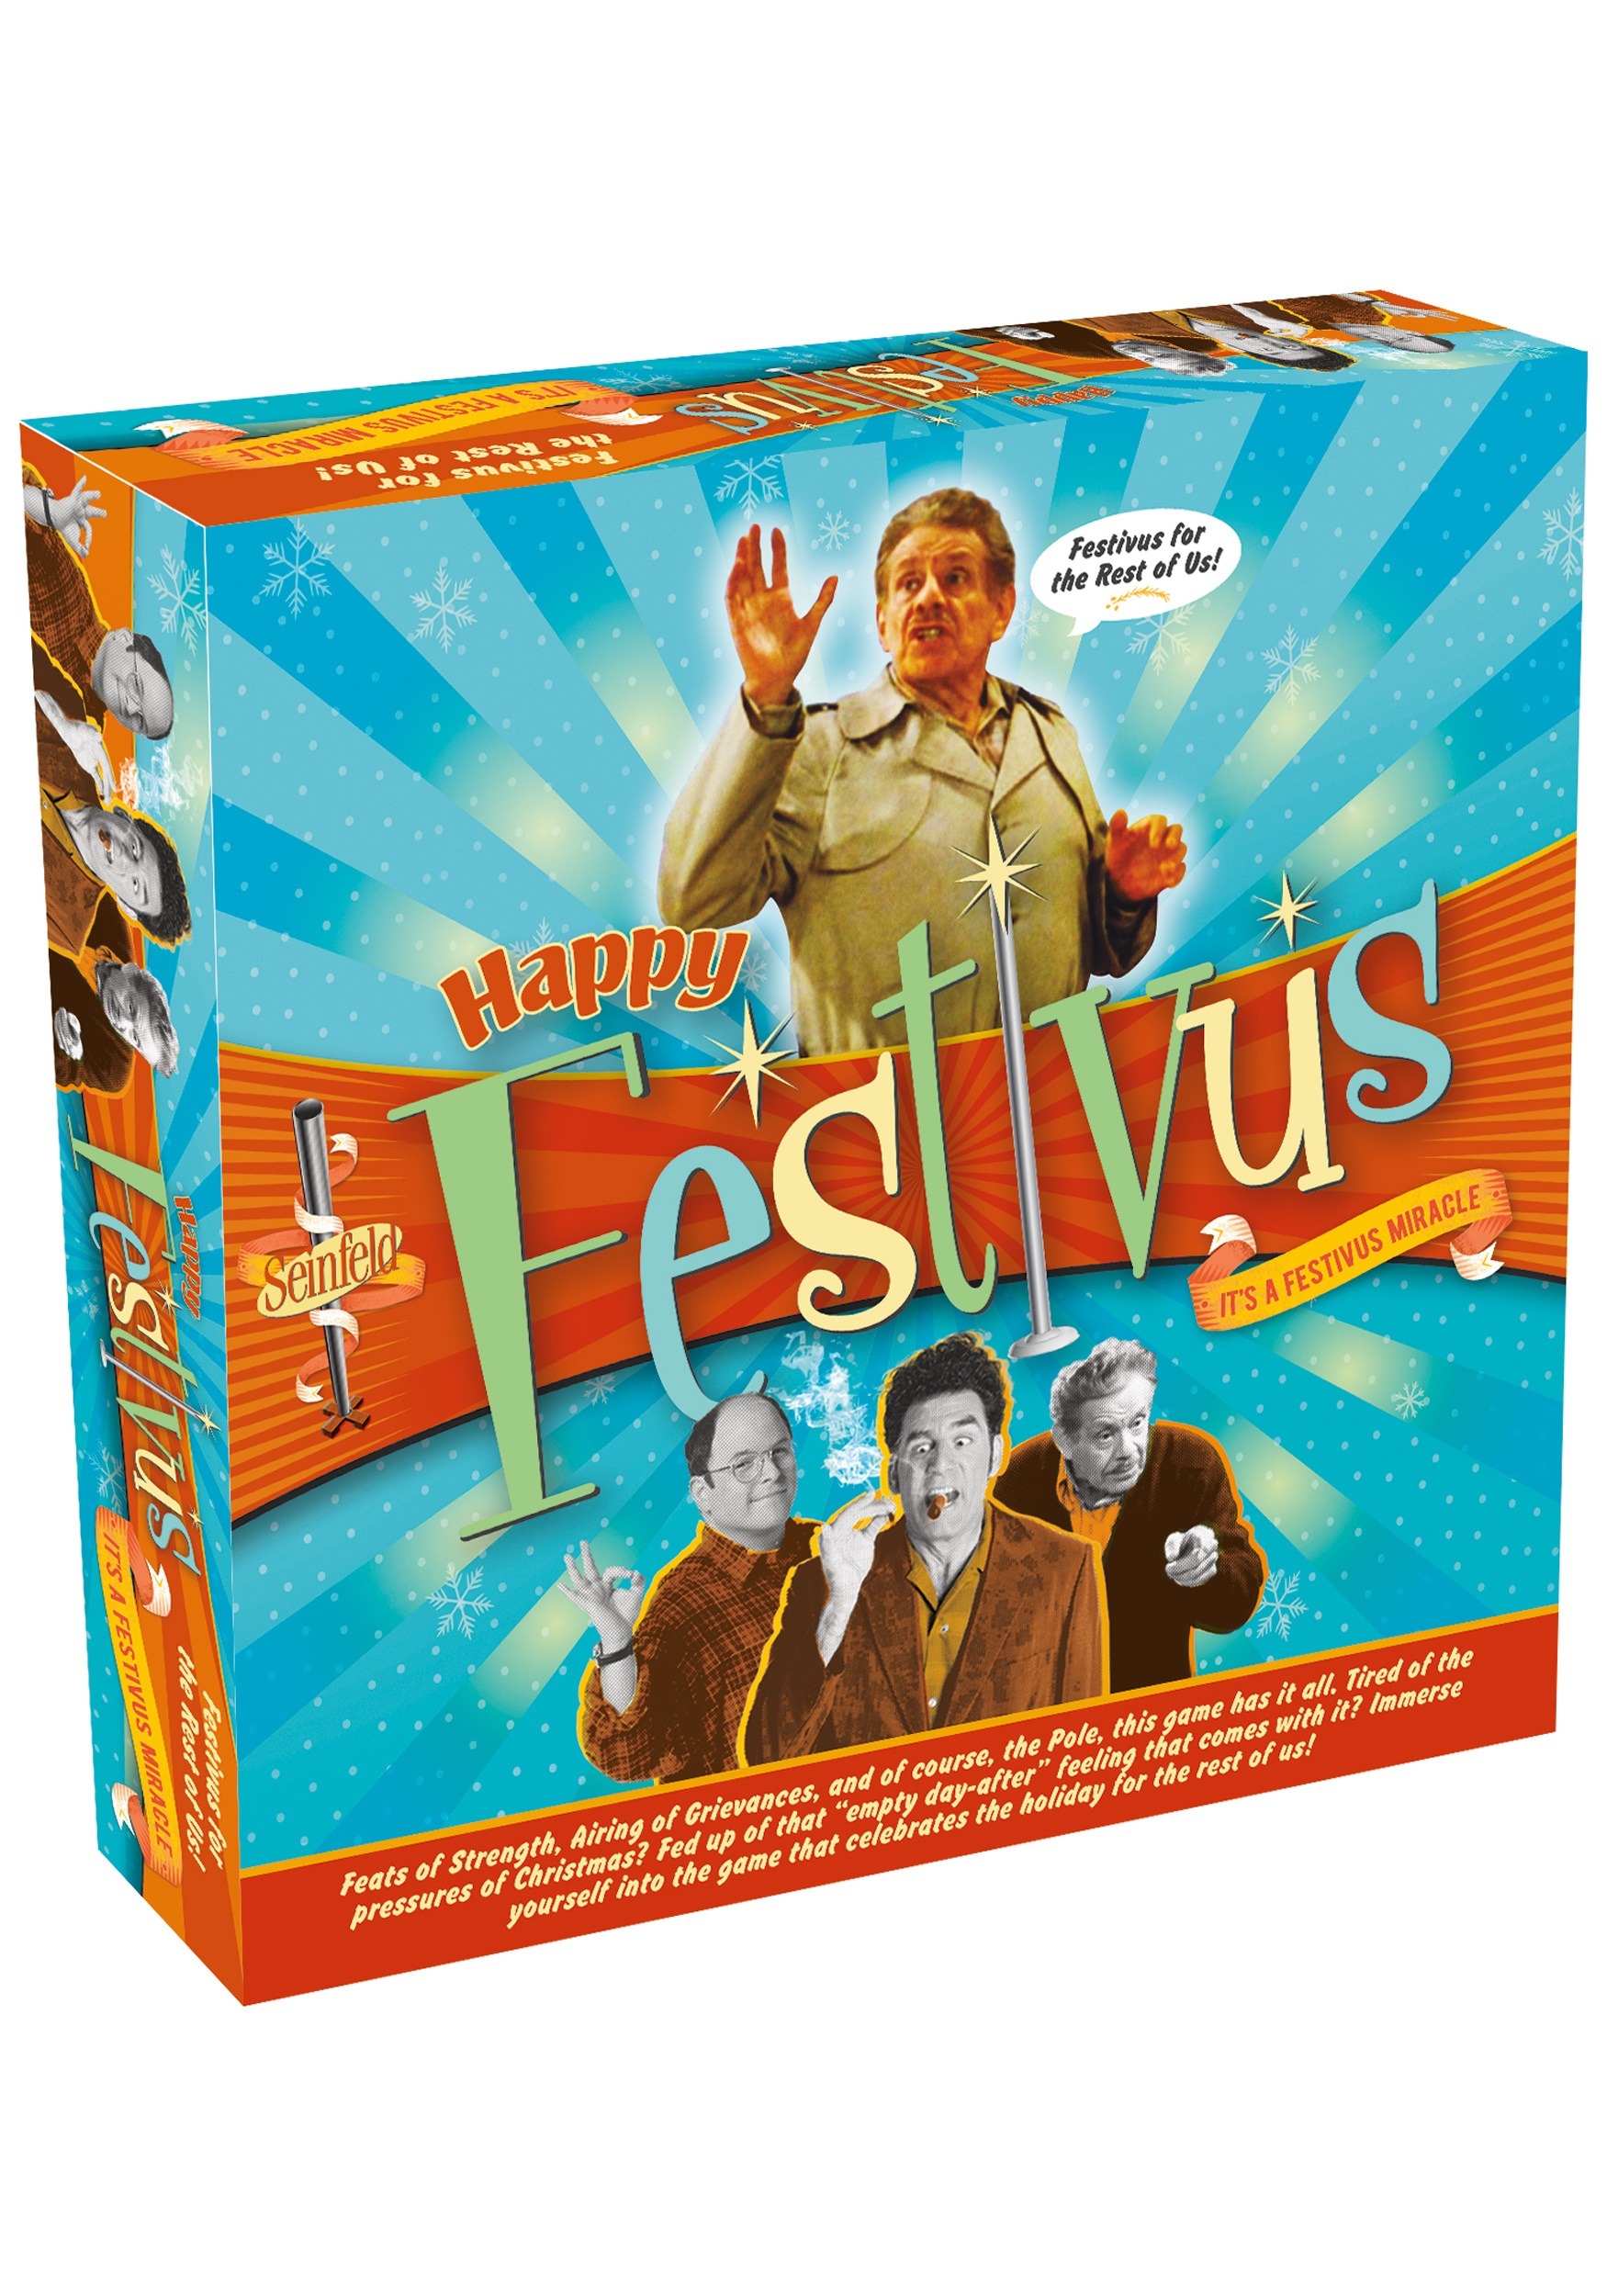 Seinfeld Festivus - A Board Game